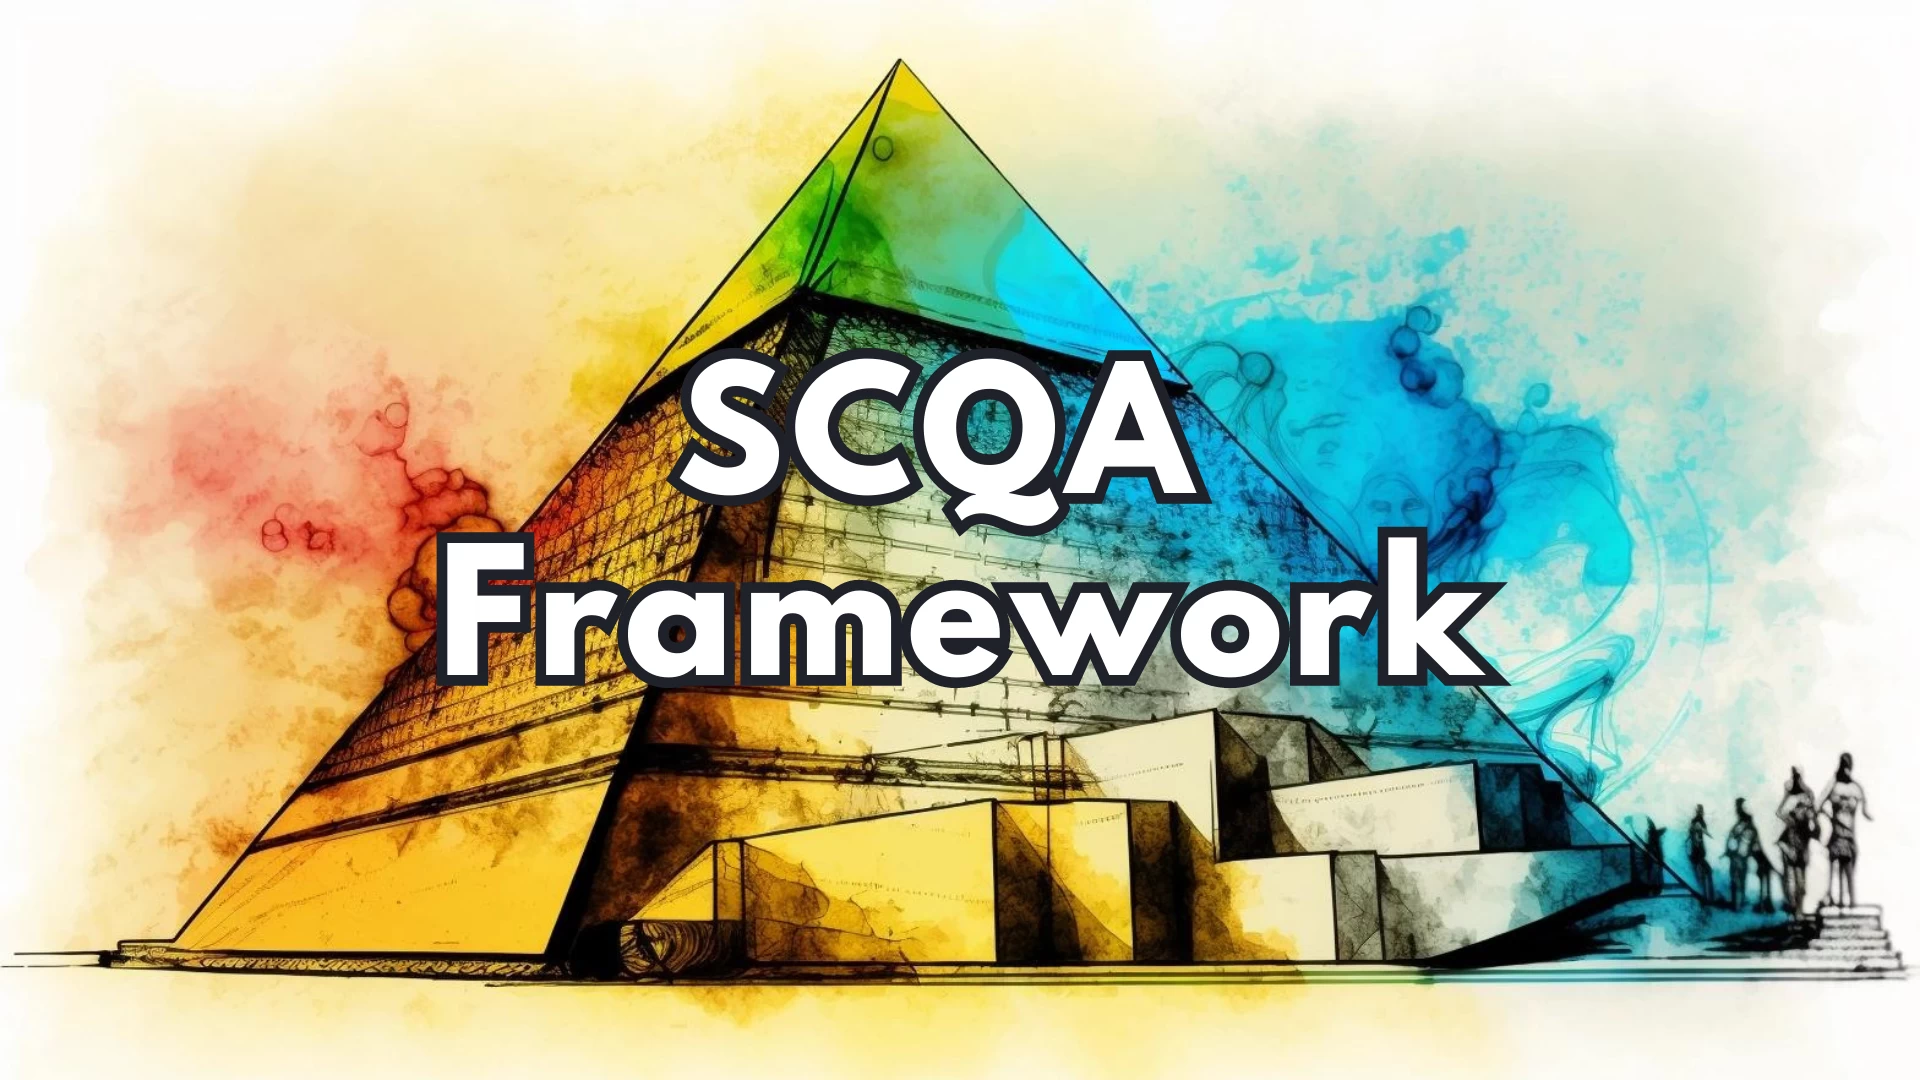 SCQA Framework